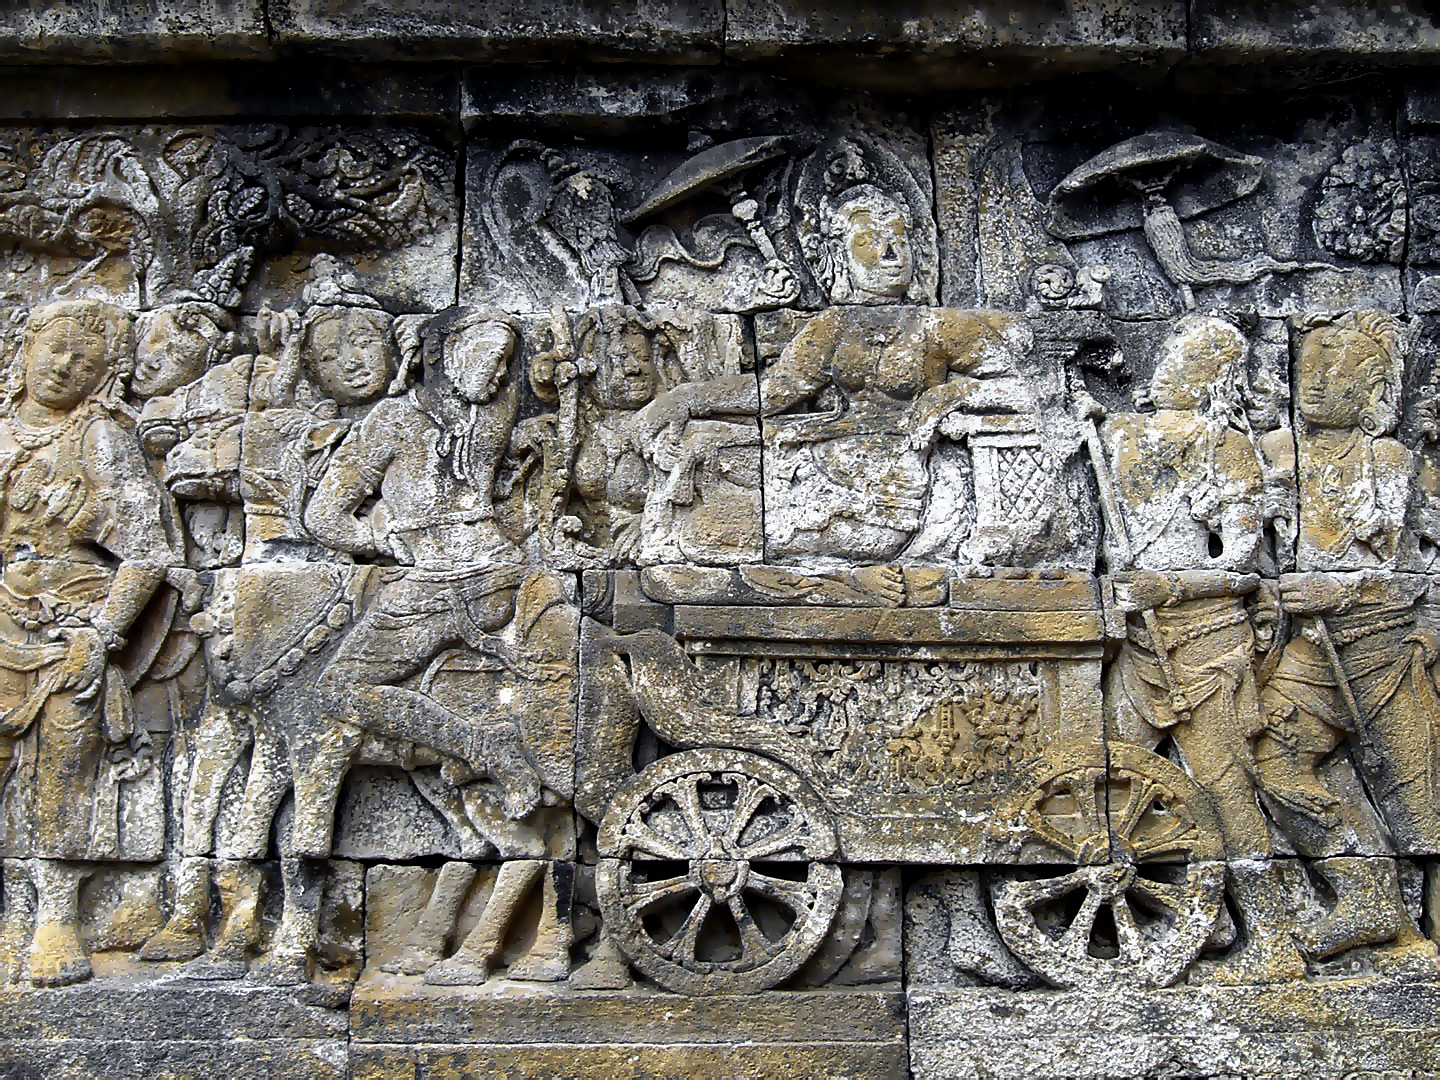 Queen Maya riding a horse carriage retreating to Lumbini to give birth to Prince Siddhartha Gautama